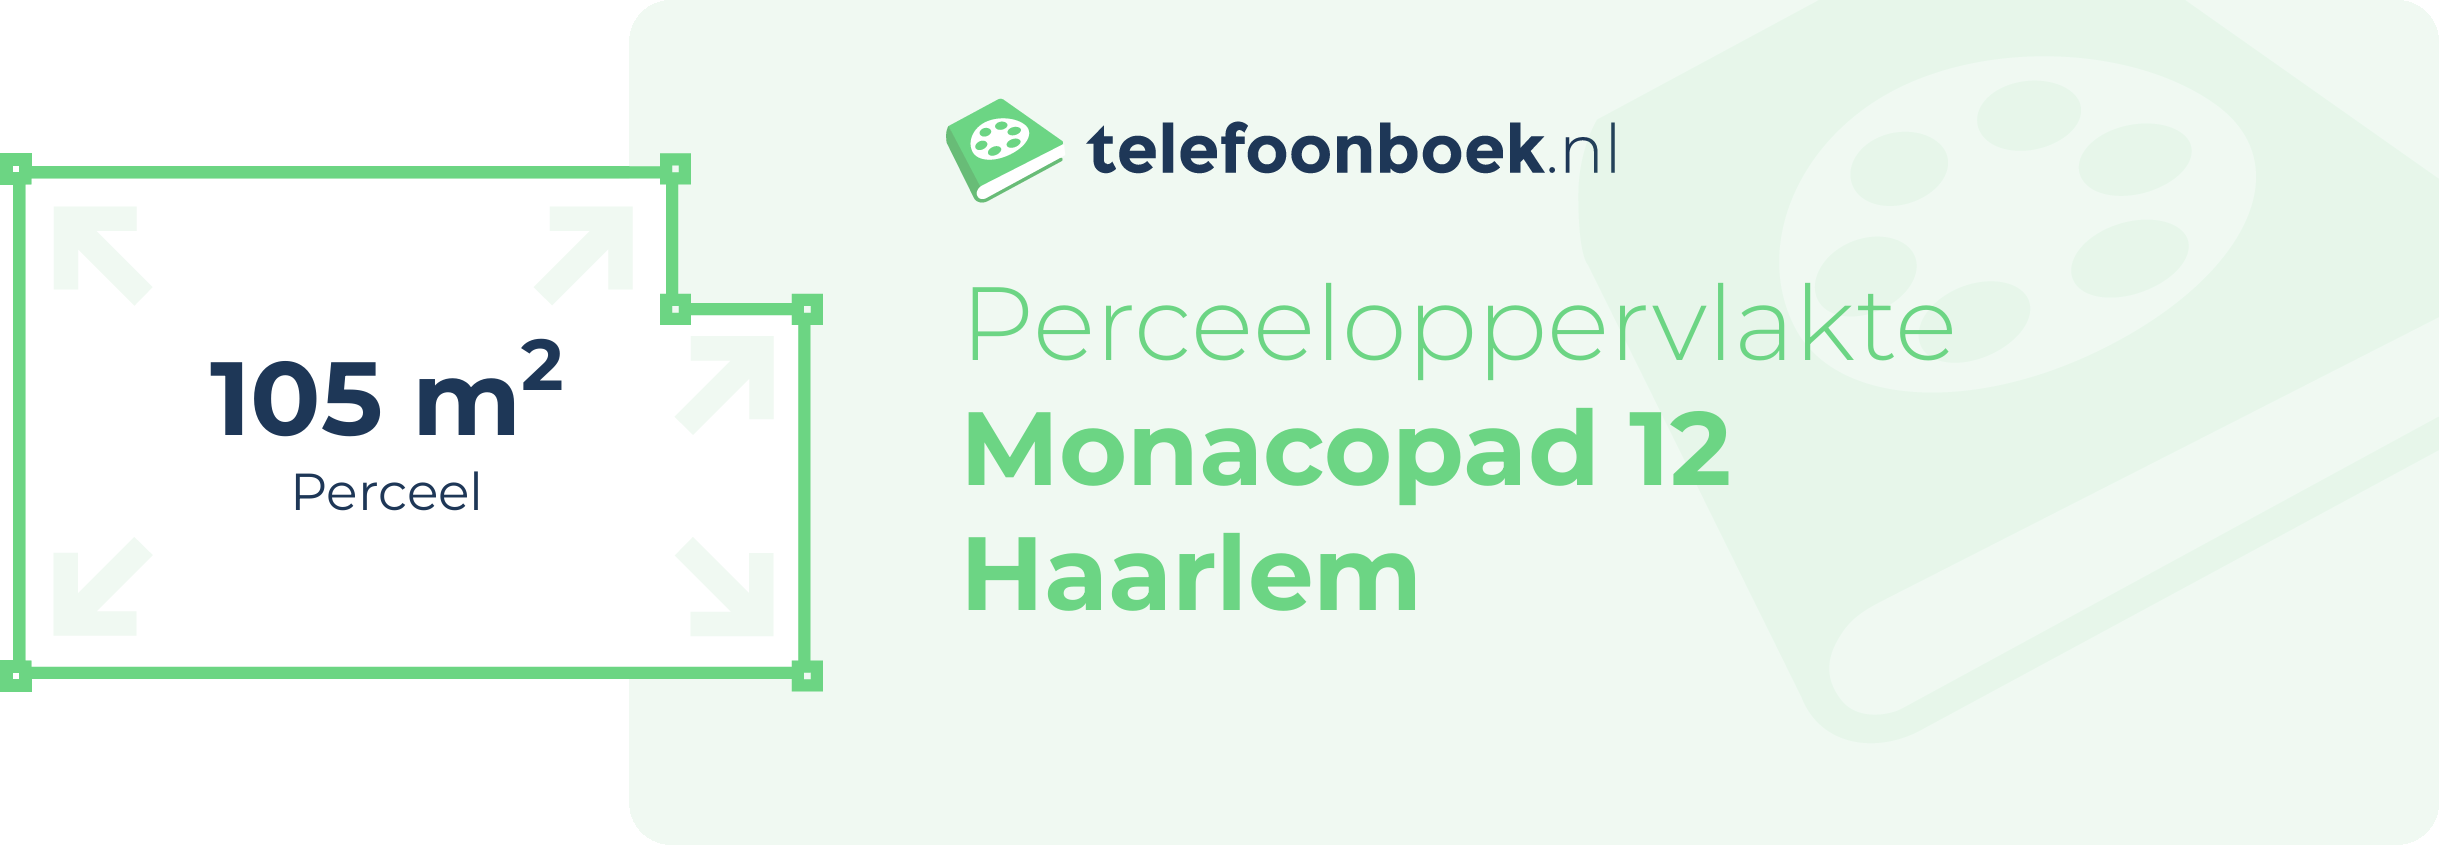 Perceeloppervlakte Monacopad 12 Haarlem